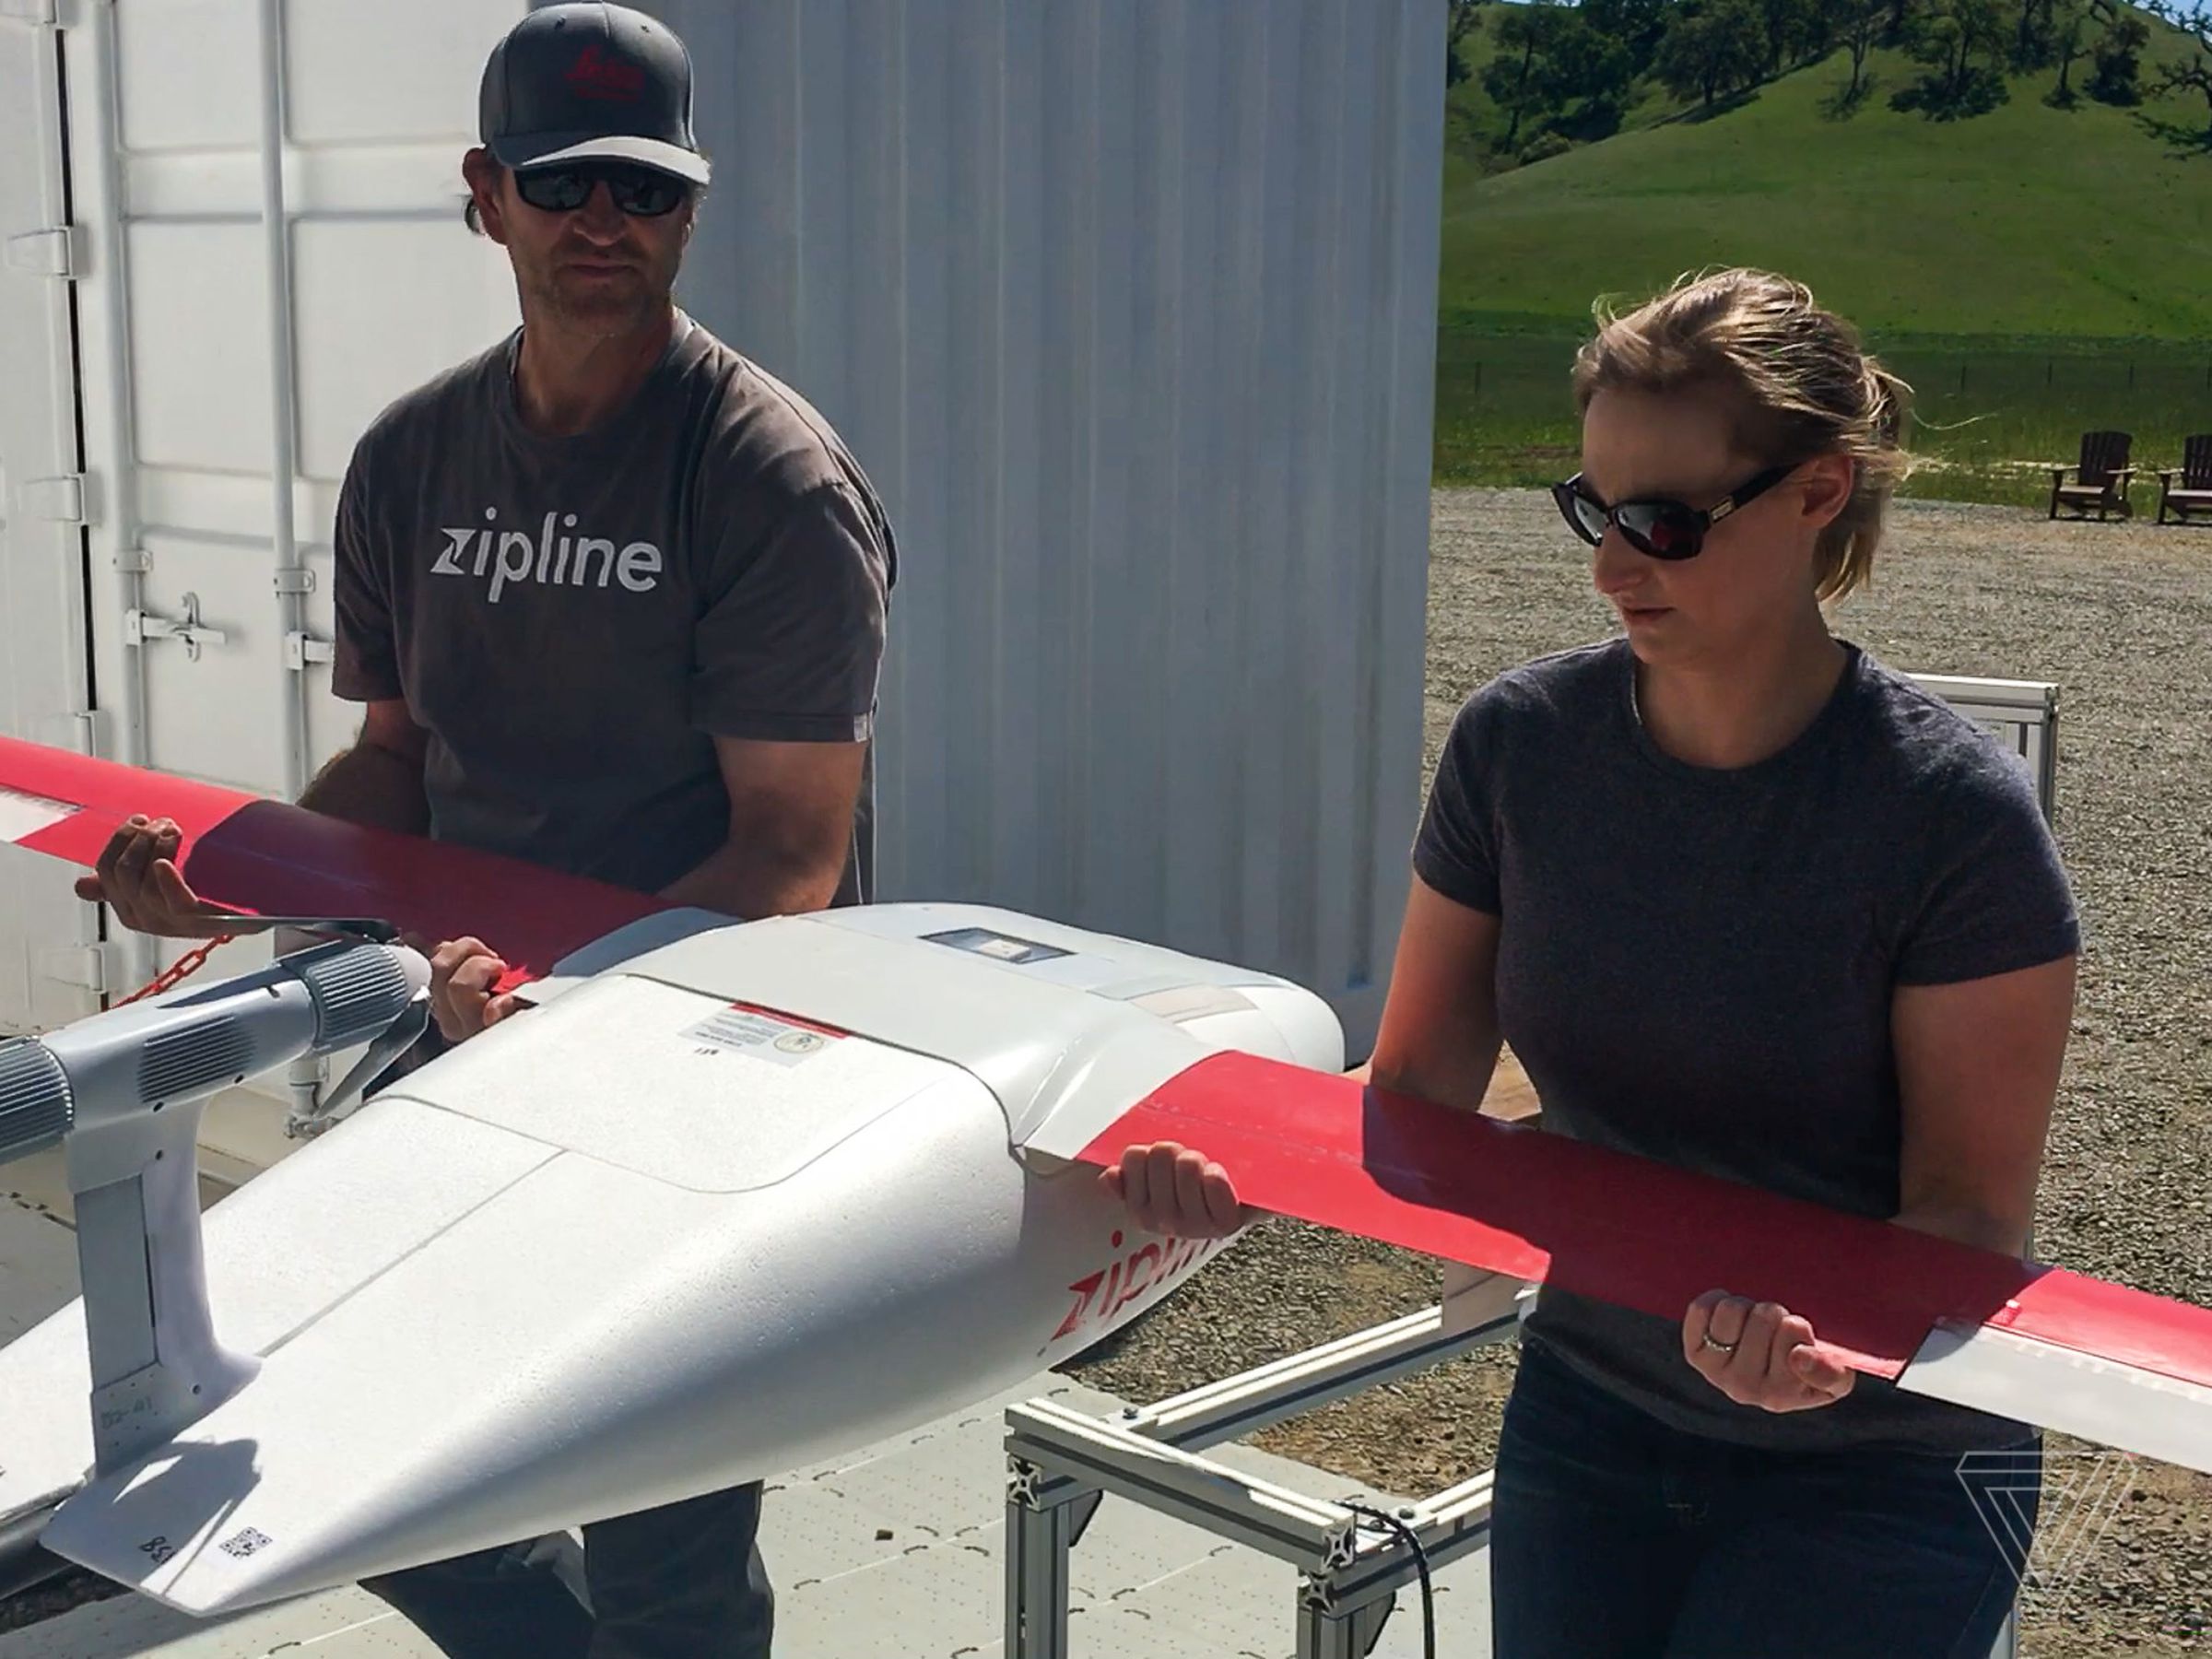 Flight operator Jeff Farr helps me carry one of Zipline’s drones to the launch platform.